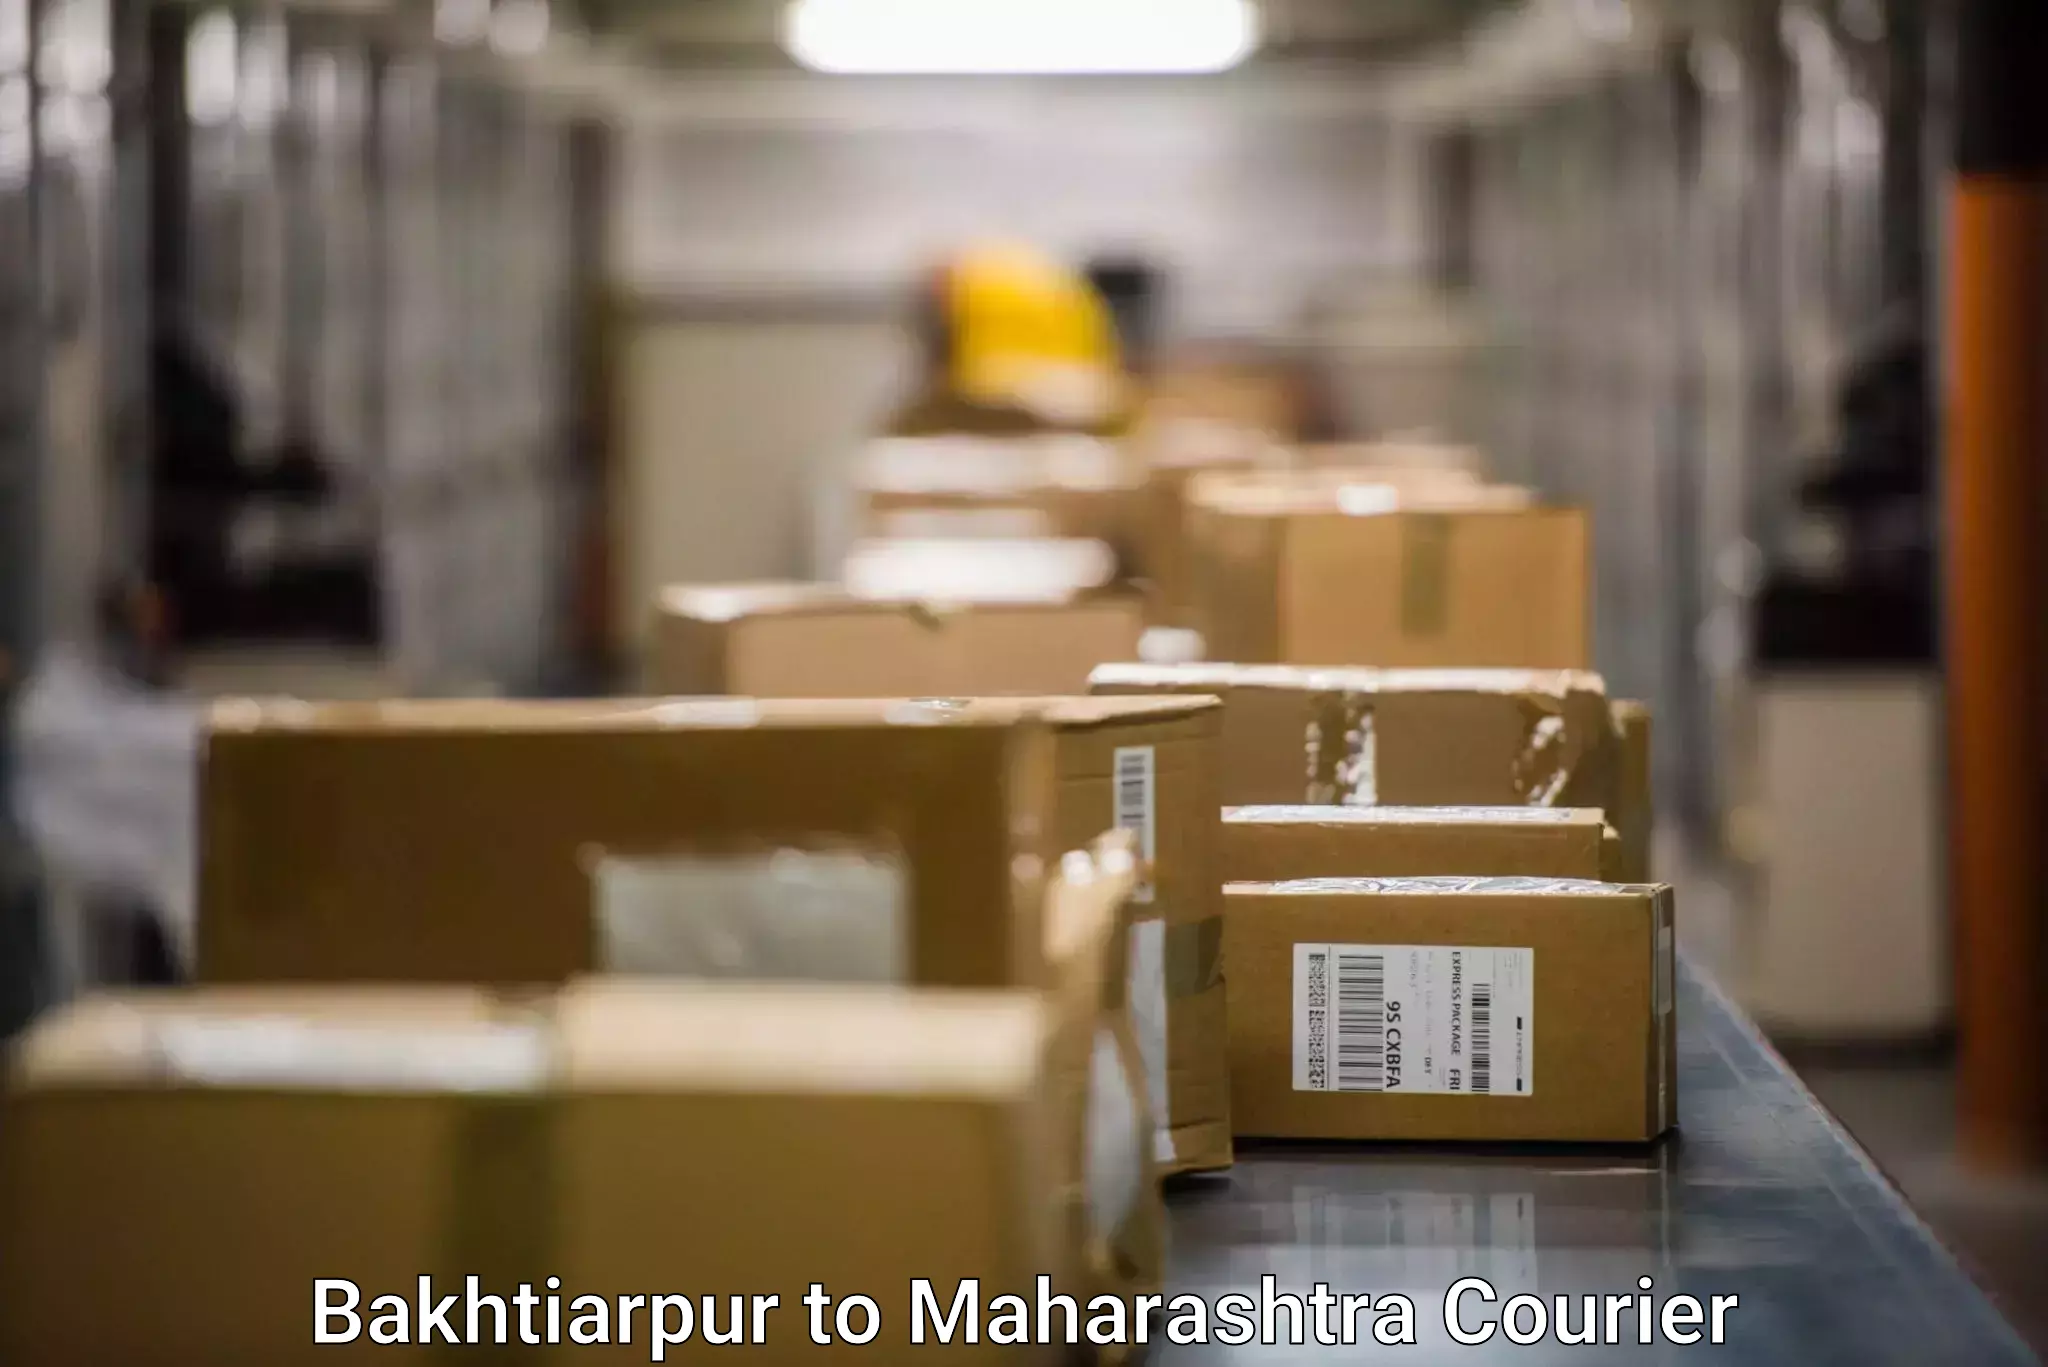 Delivery service partnership in Bakhtiarpur to Vasai